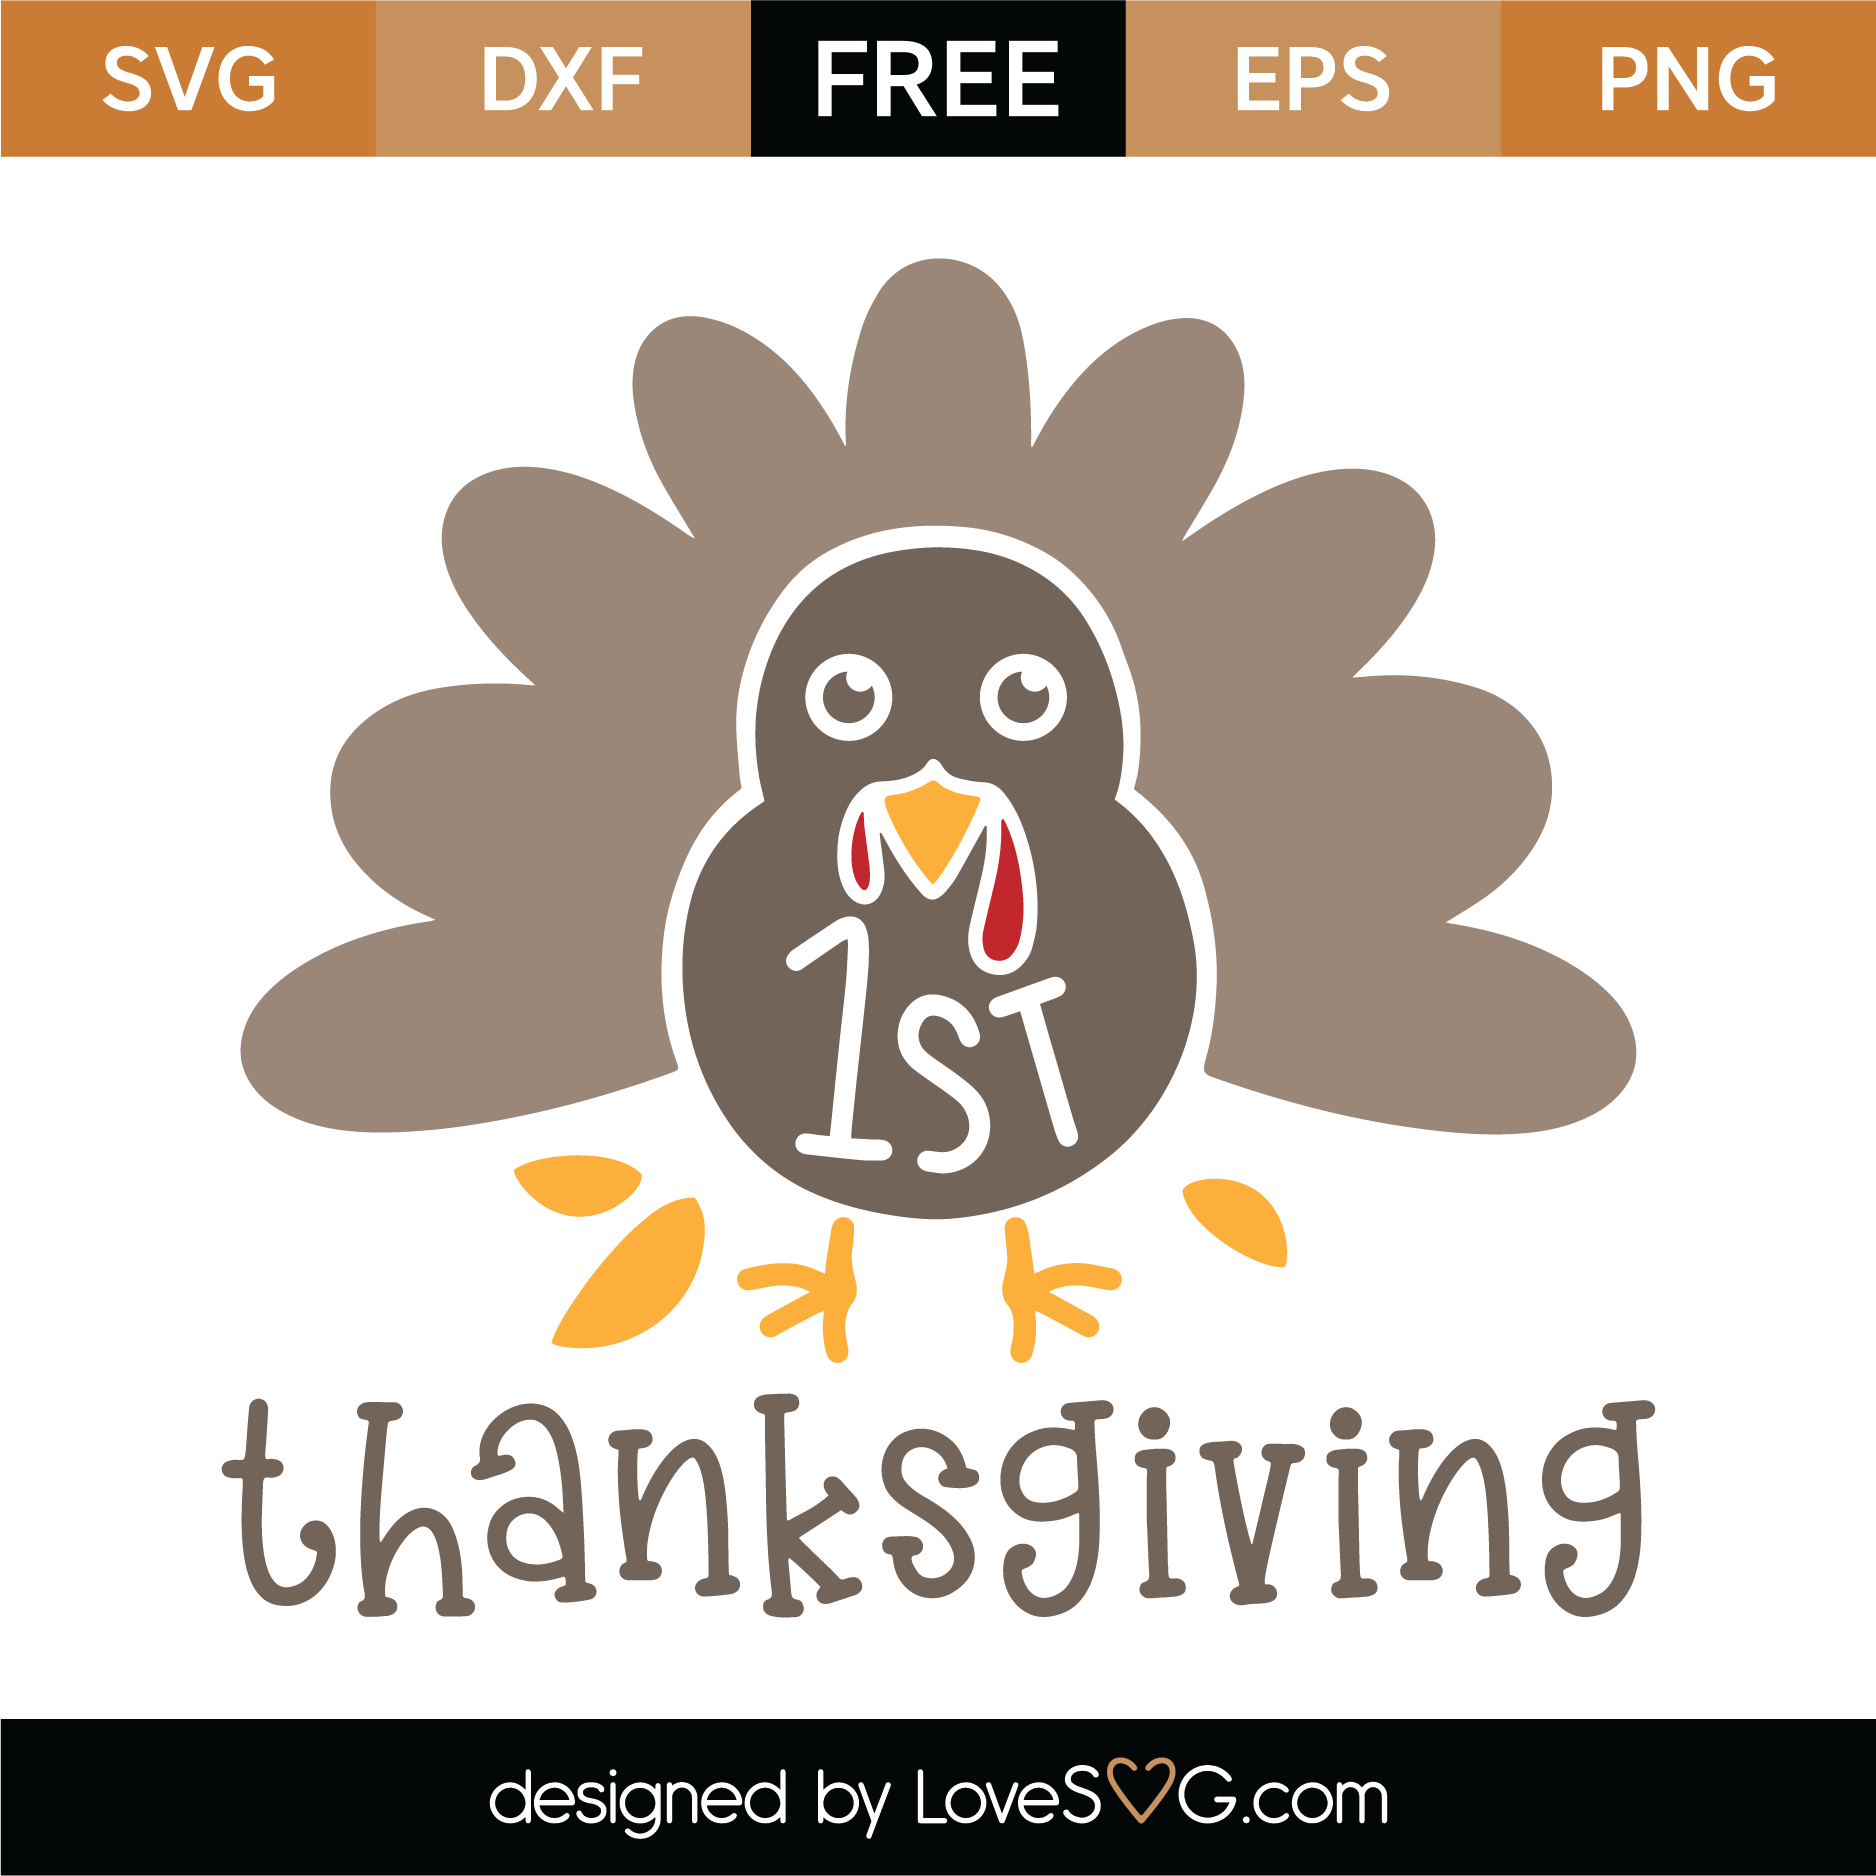 Download Free 1st Thanksgiving SVG Cut File | Lovesvg.com